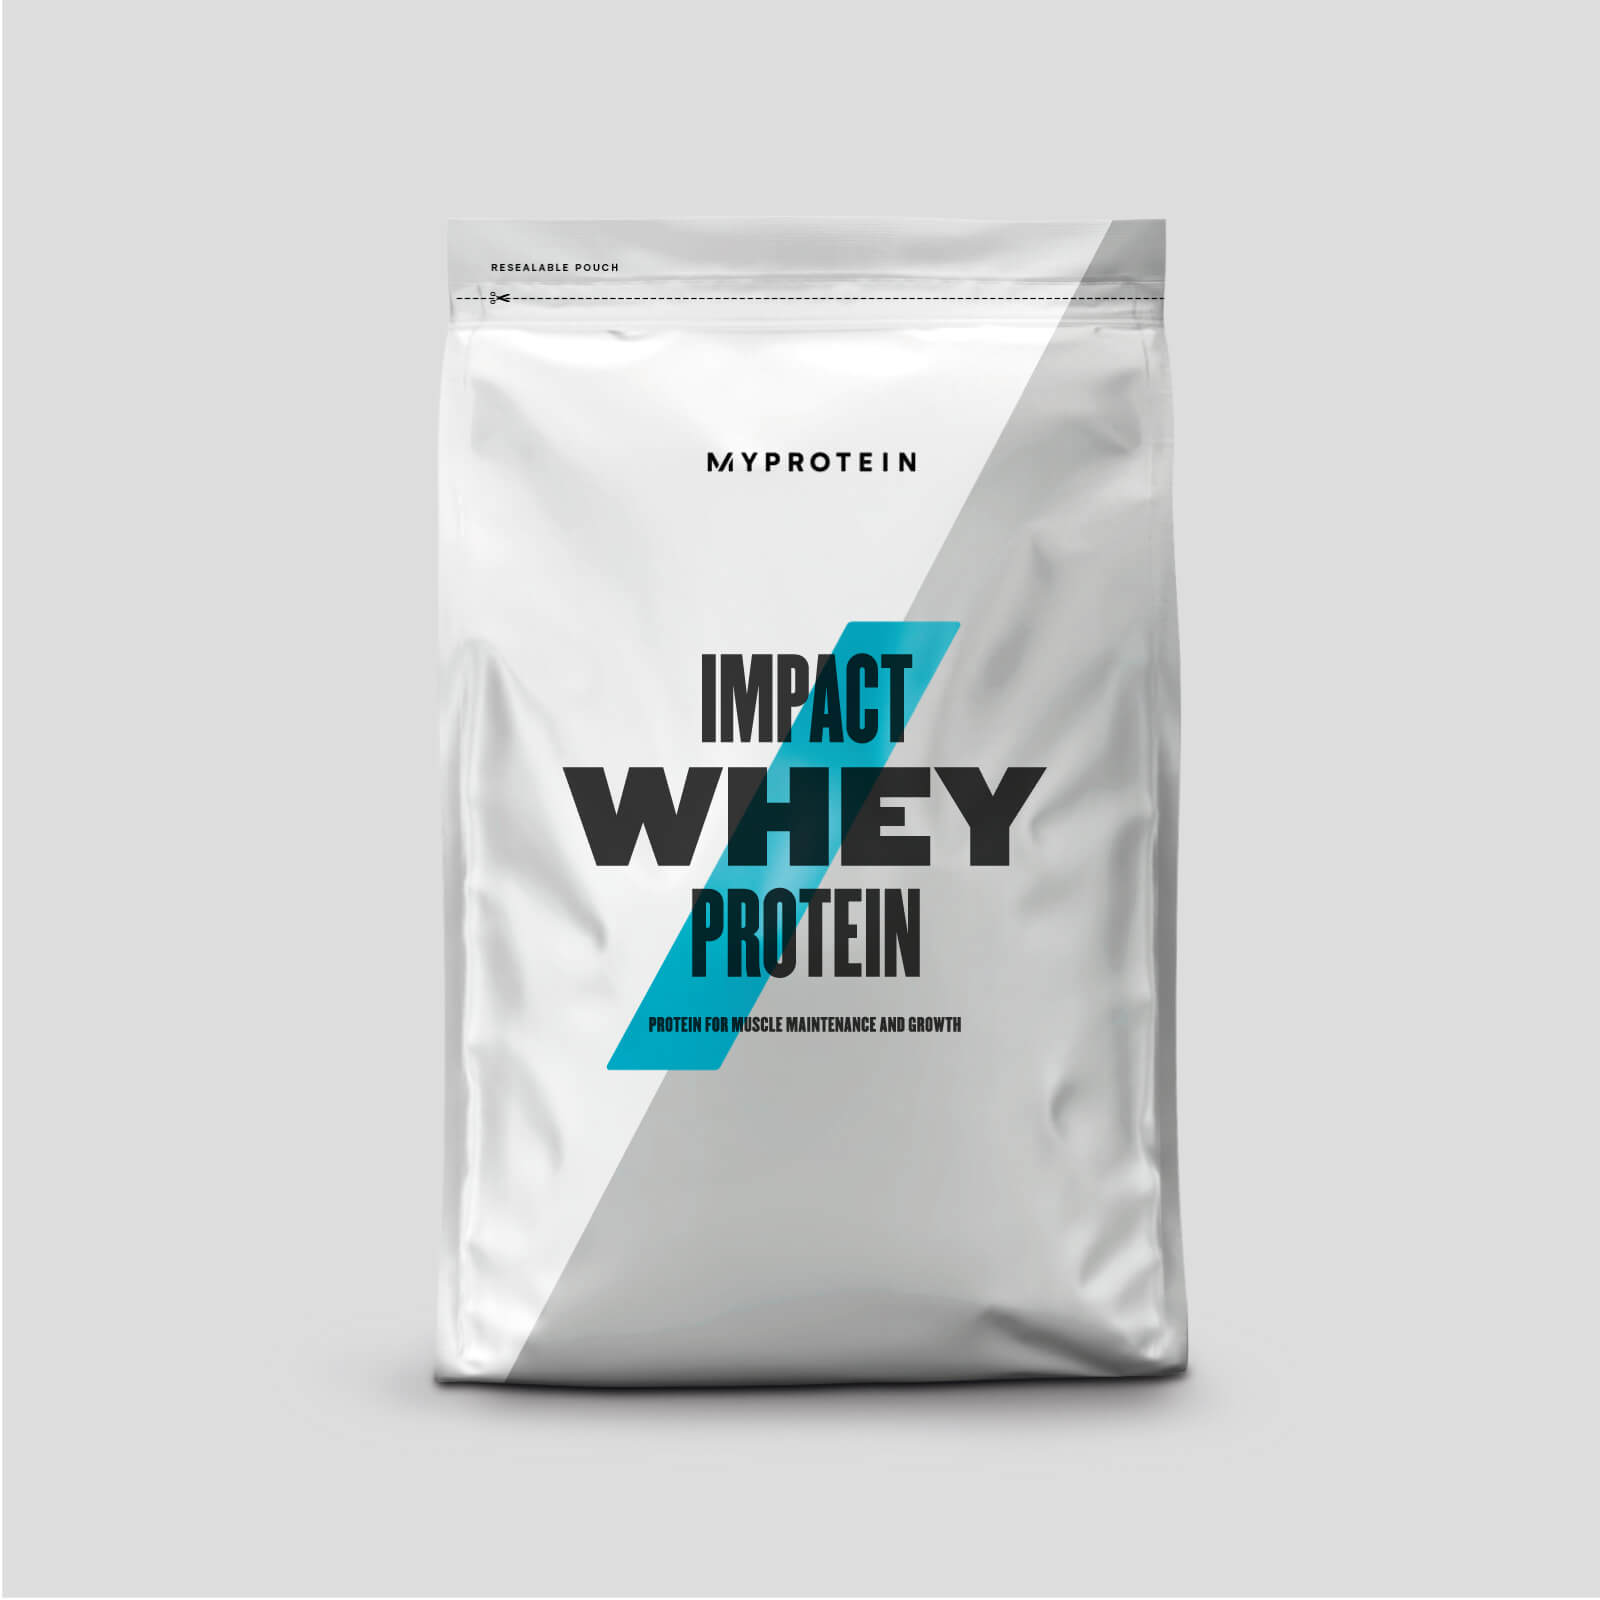 Myprotein Impact Whey Protein - 500g - Natural Chocolate